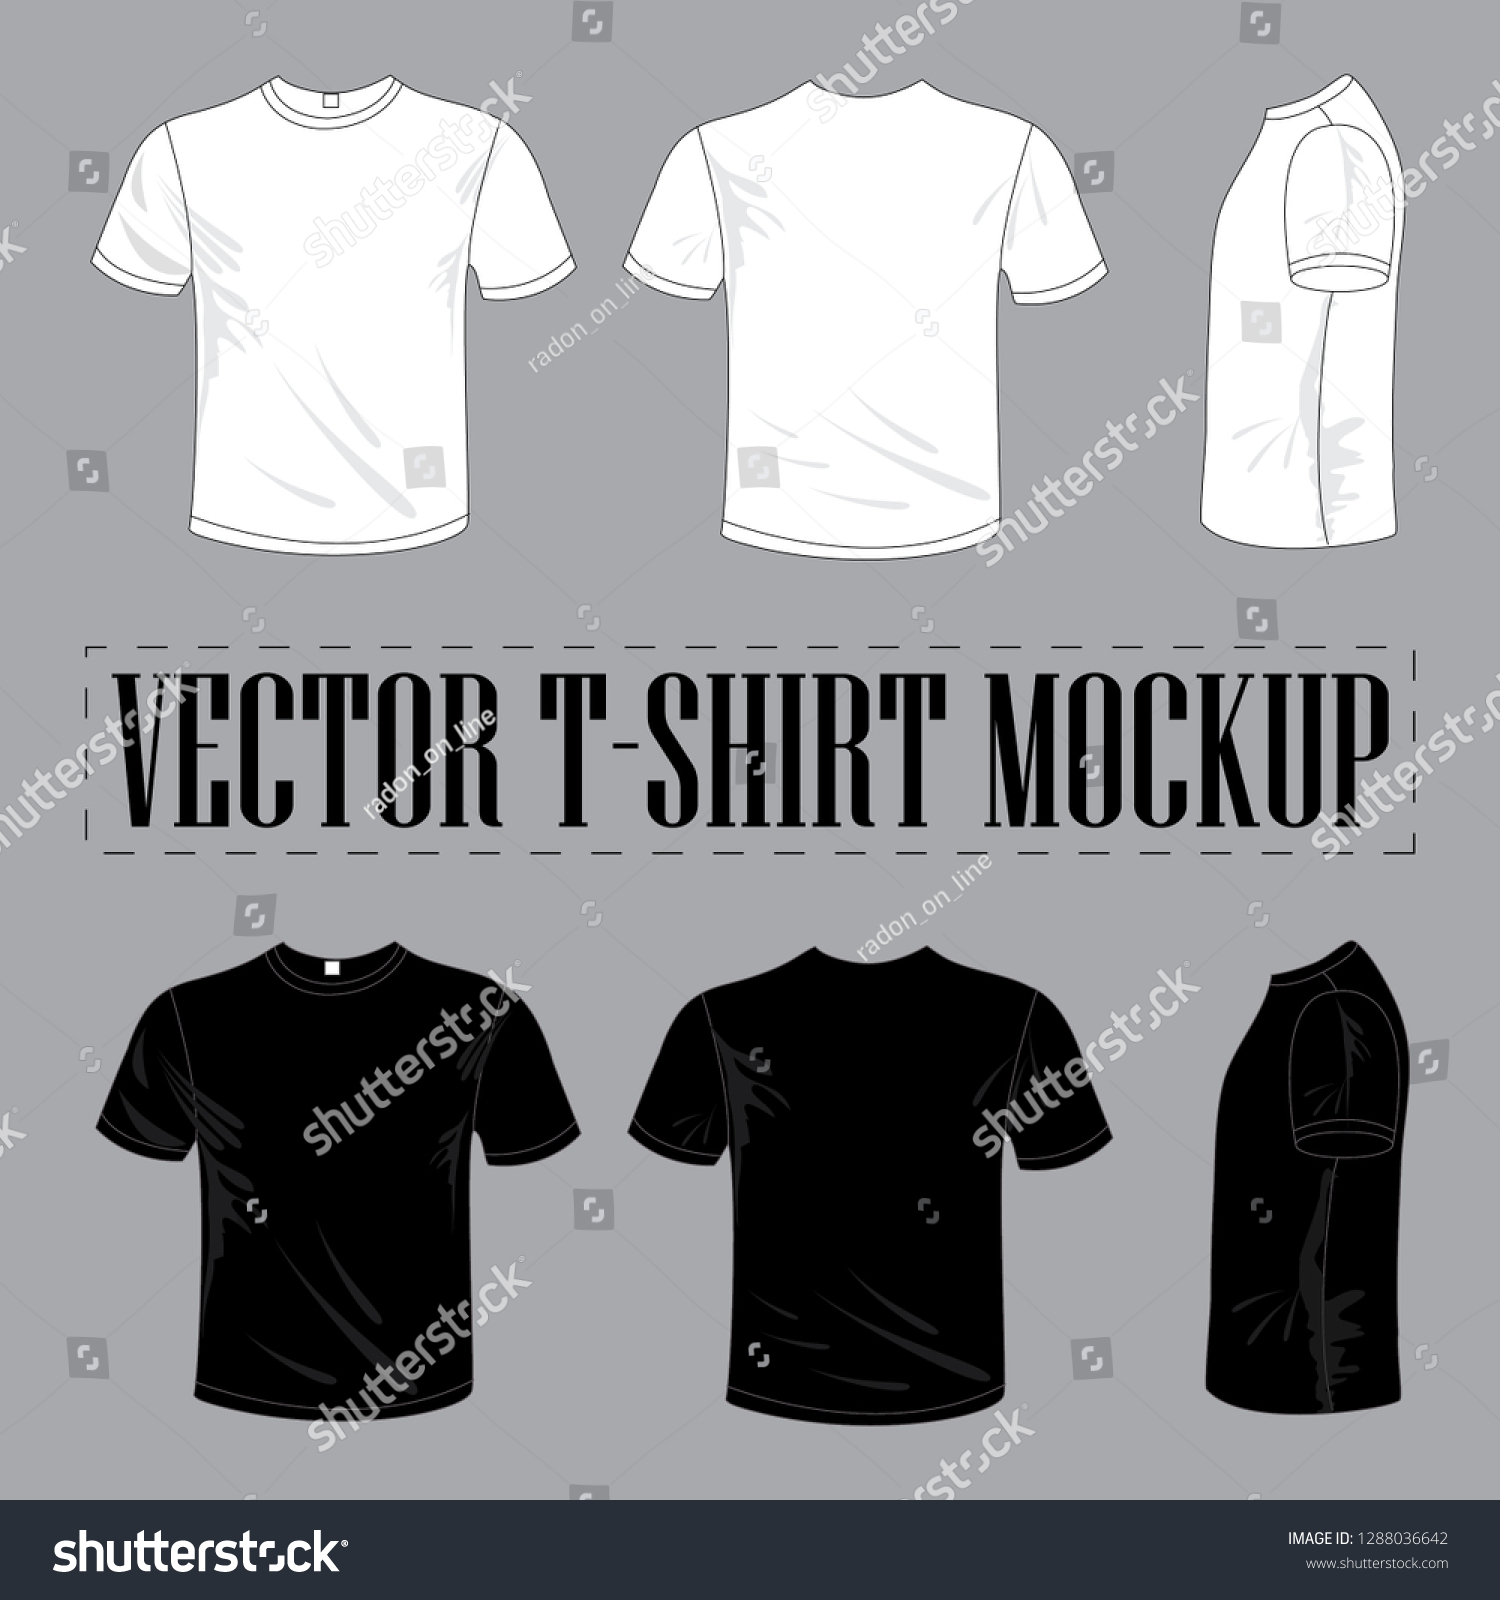 Download Vector Tshirt Mockup Stock Vector Royalty Free 1288036642